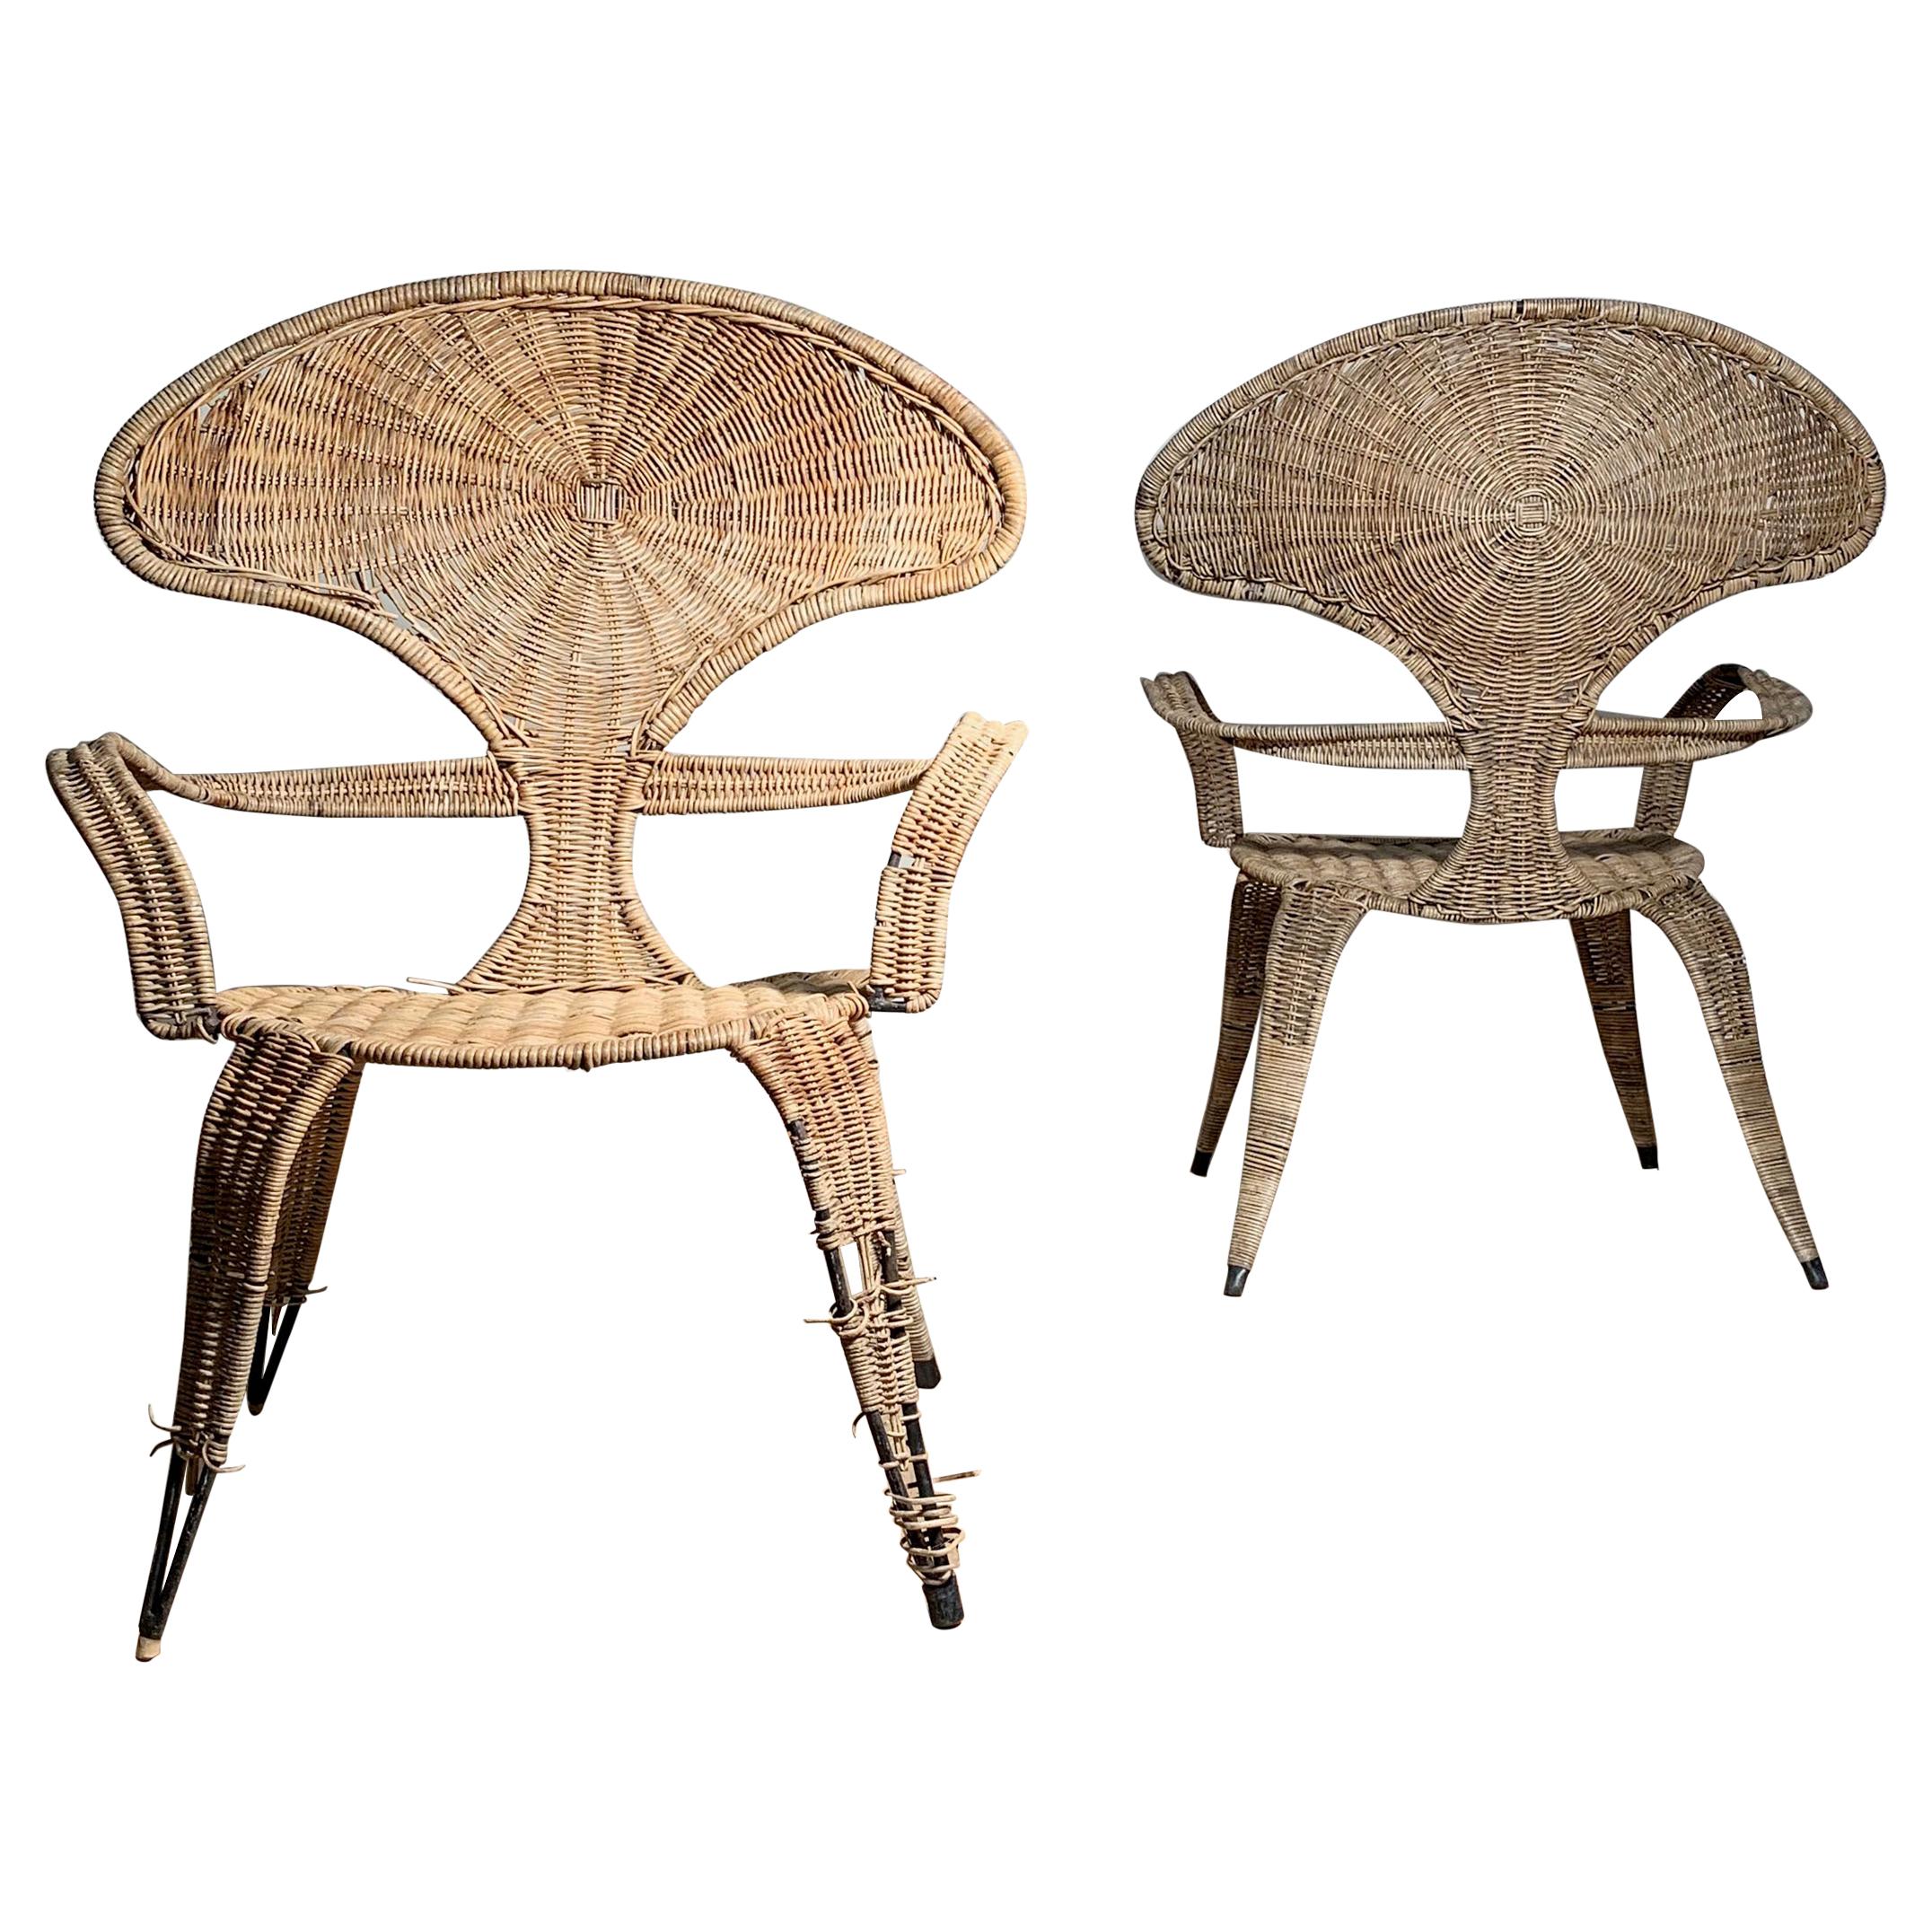 Tropi-Cal Danny Ho Fong and Miller Fong Garden Patio Pair of Chairs